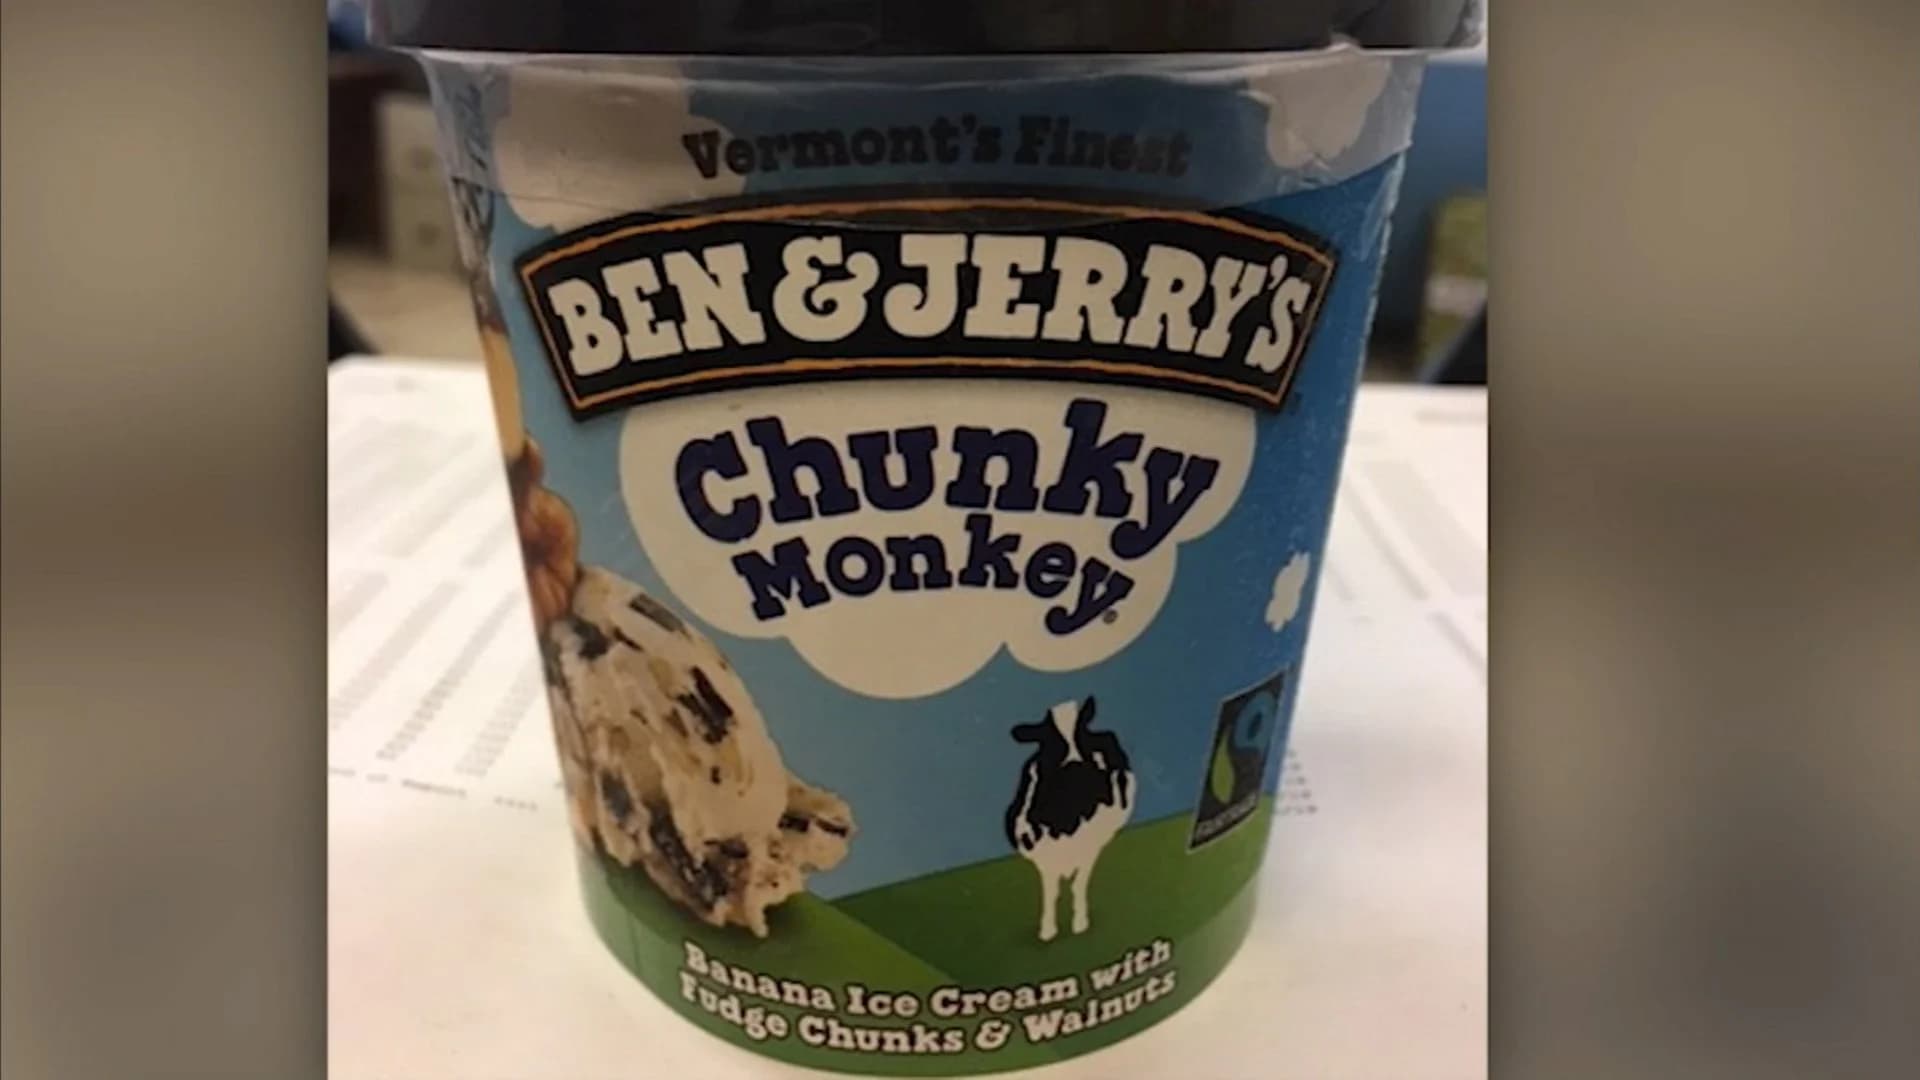 Company voluntarily recalls certain Ben & Jerry’s ice cream flavors